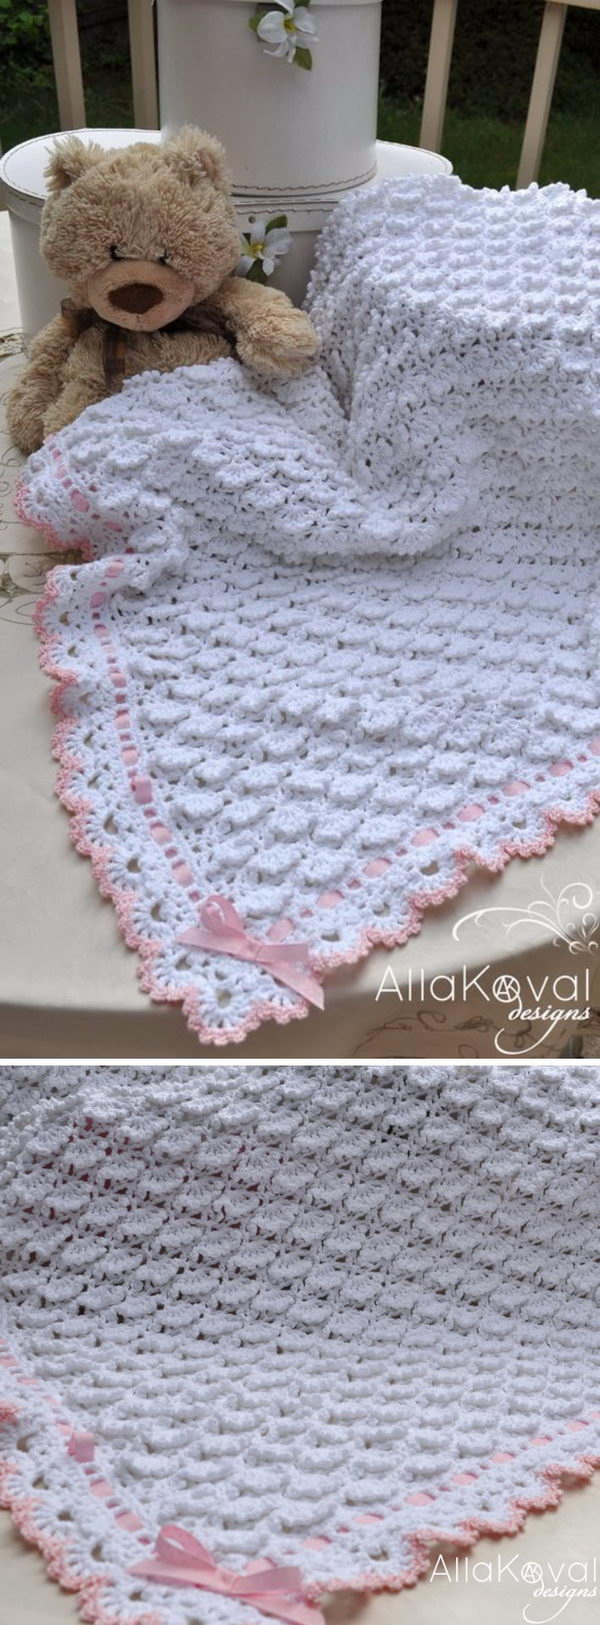 Free Crochet Patterns Baby Blankets 30 Free Crochet Patterns For Blankets Hative